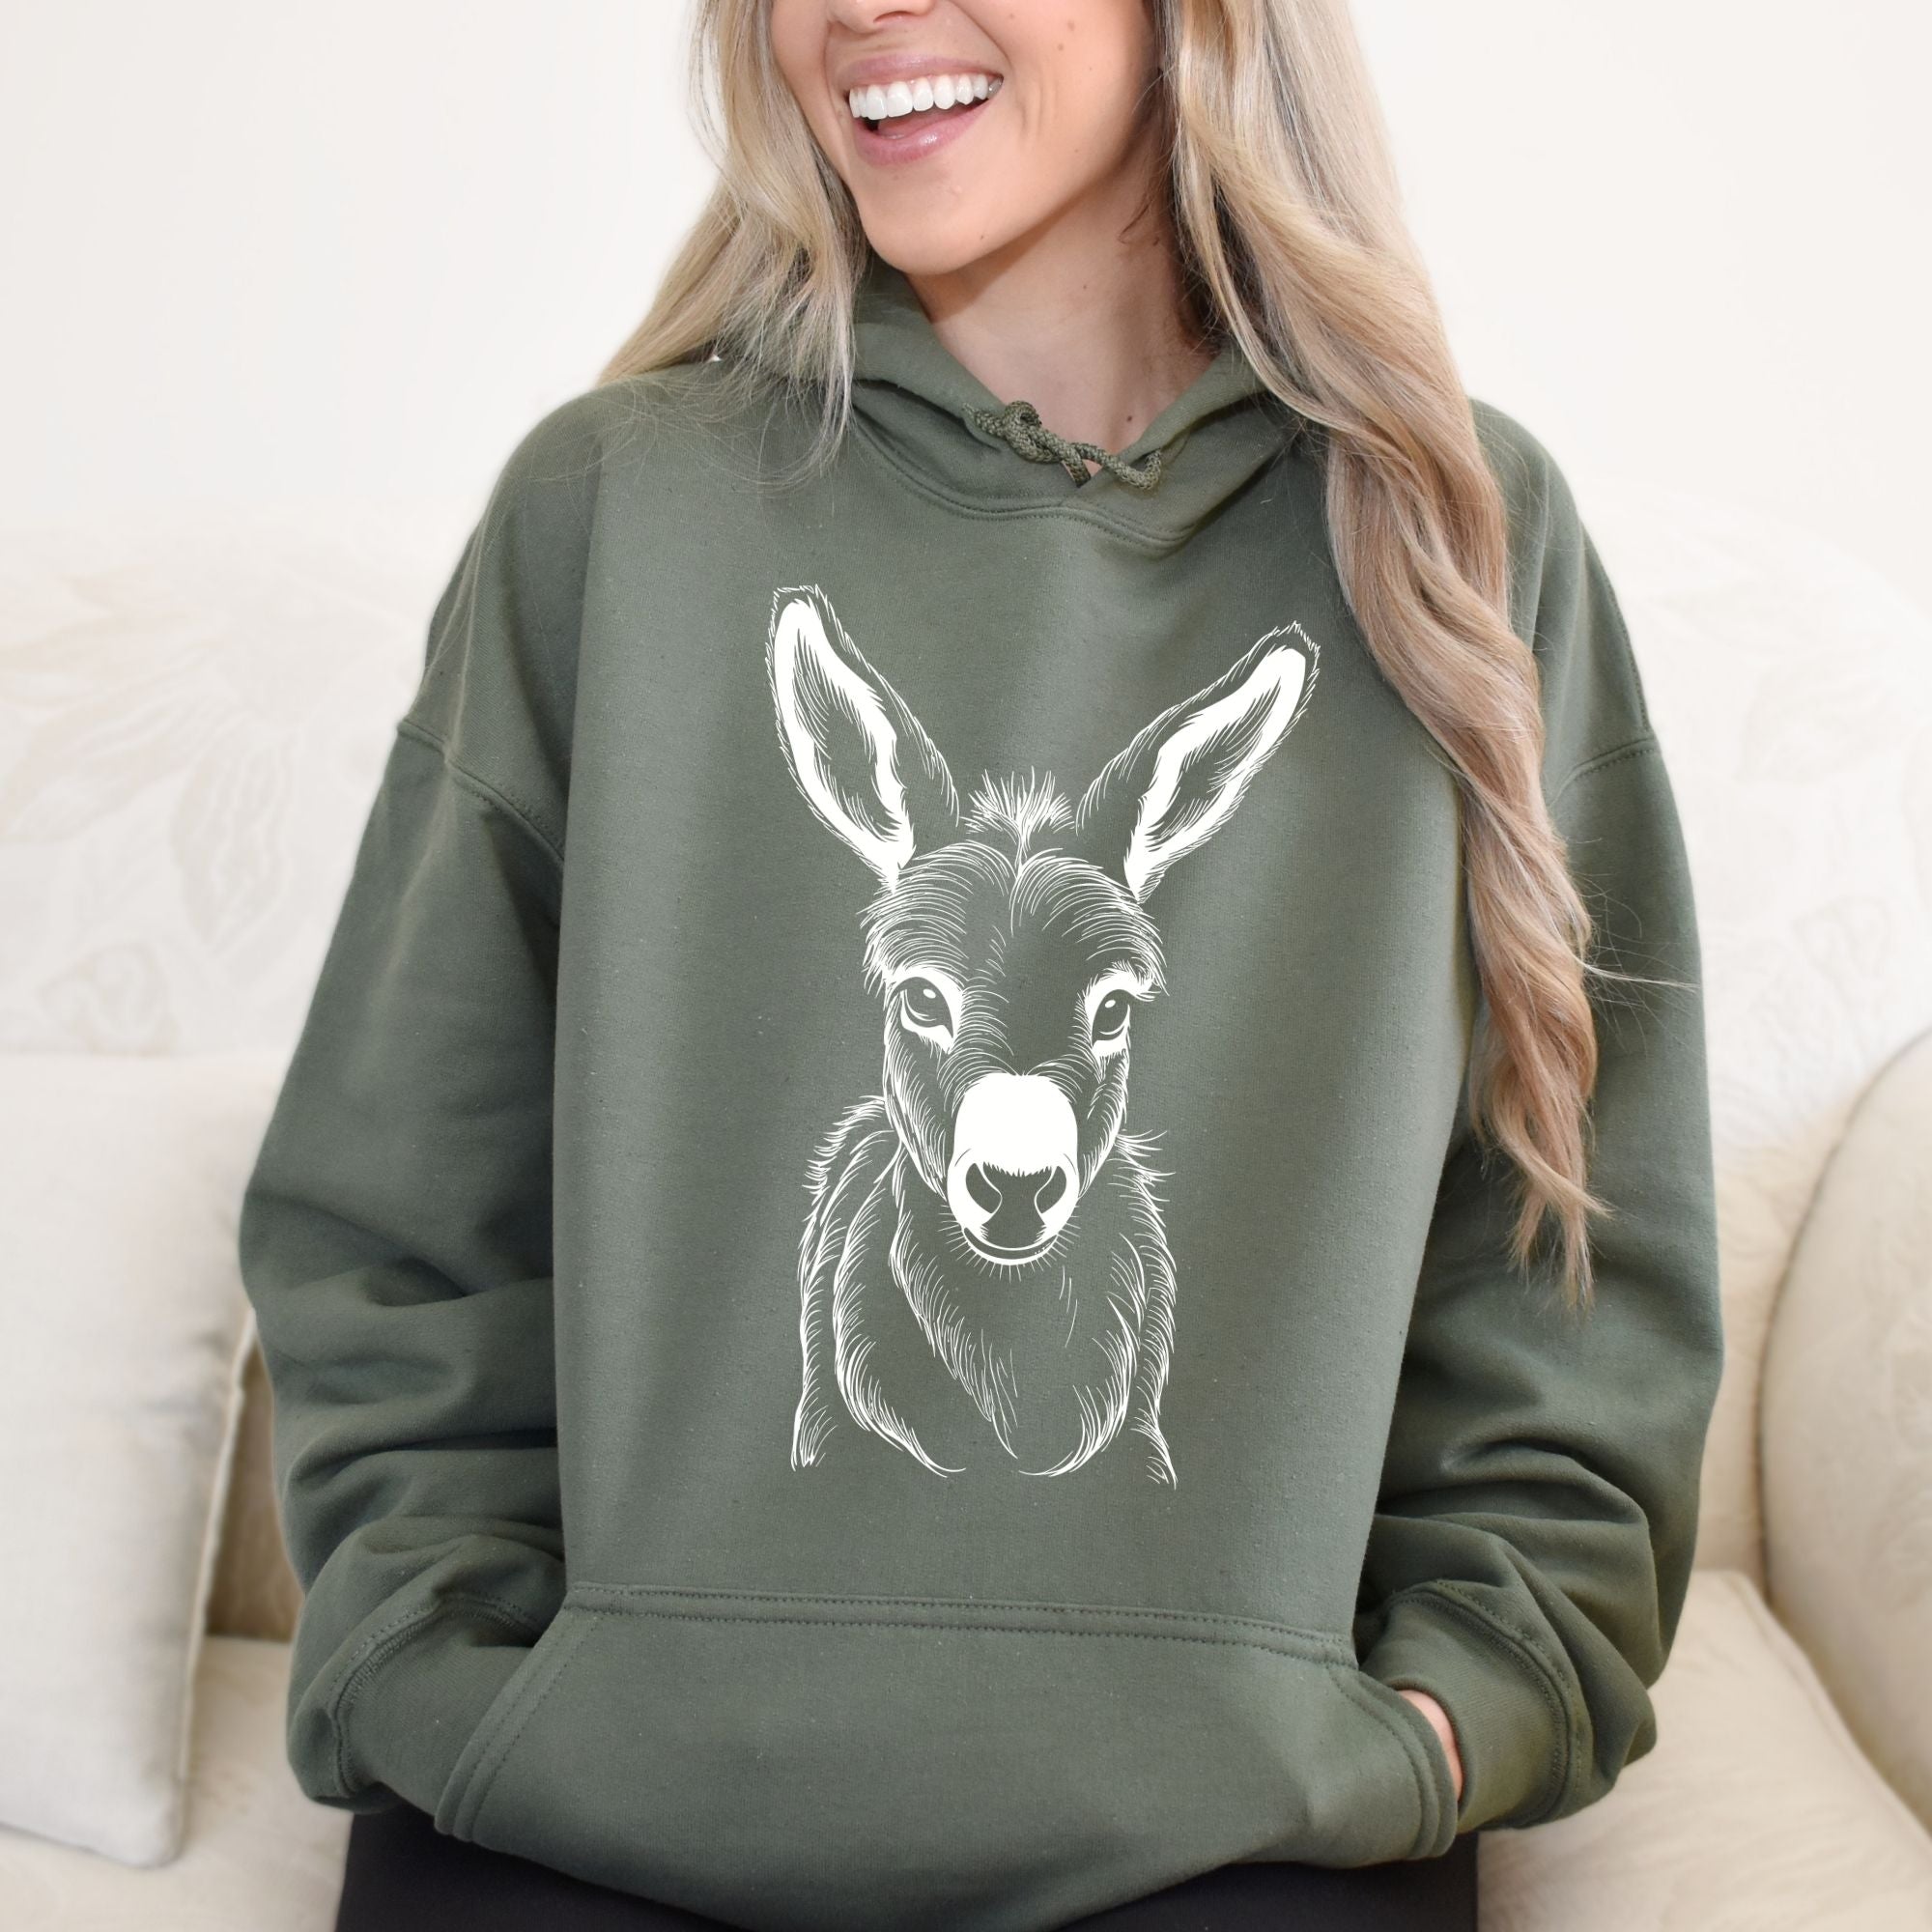 Cute Donkey Sweatshirt - Super Soft Gildan Hoodie or Crewneck *UNISEX FIT*-Sweatshirts-208 Tees Wholesale, Idaho